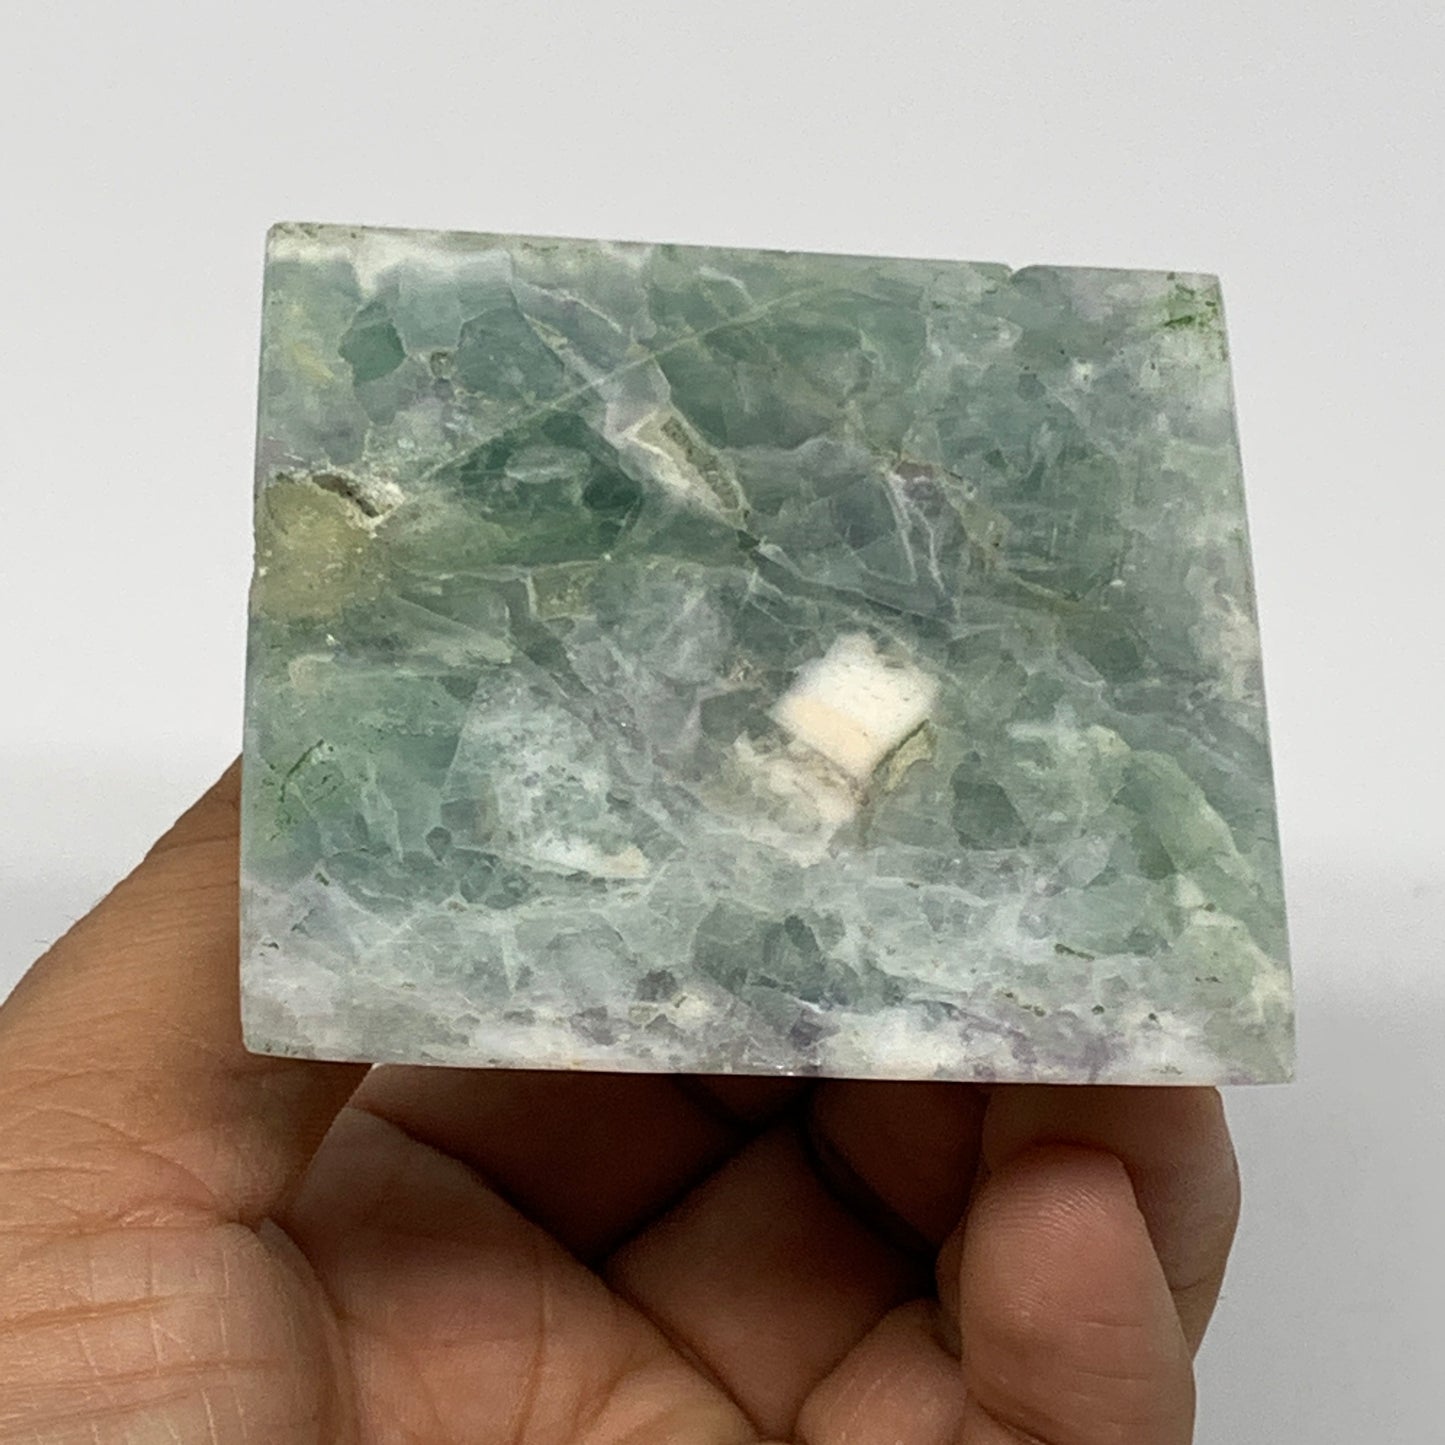 175.8g, 1.8"x2.4"x2.2" Natural Green Fluorite Pyramid Crystal Gemstone @Mexico,